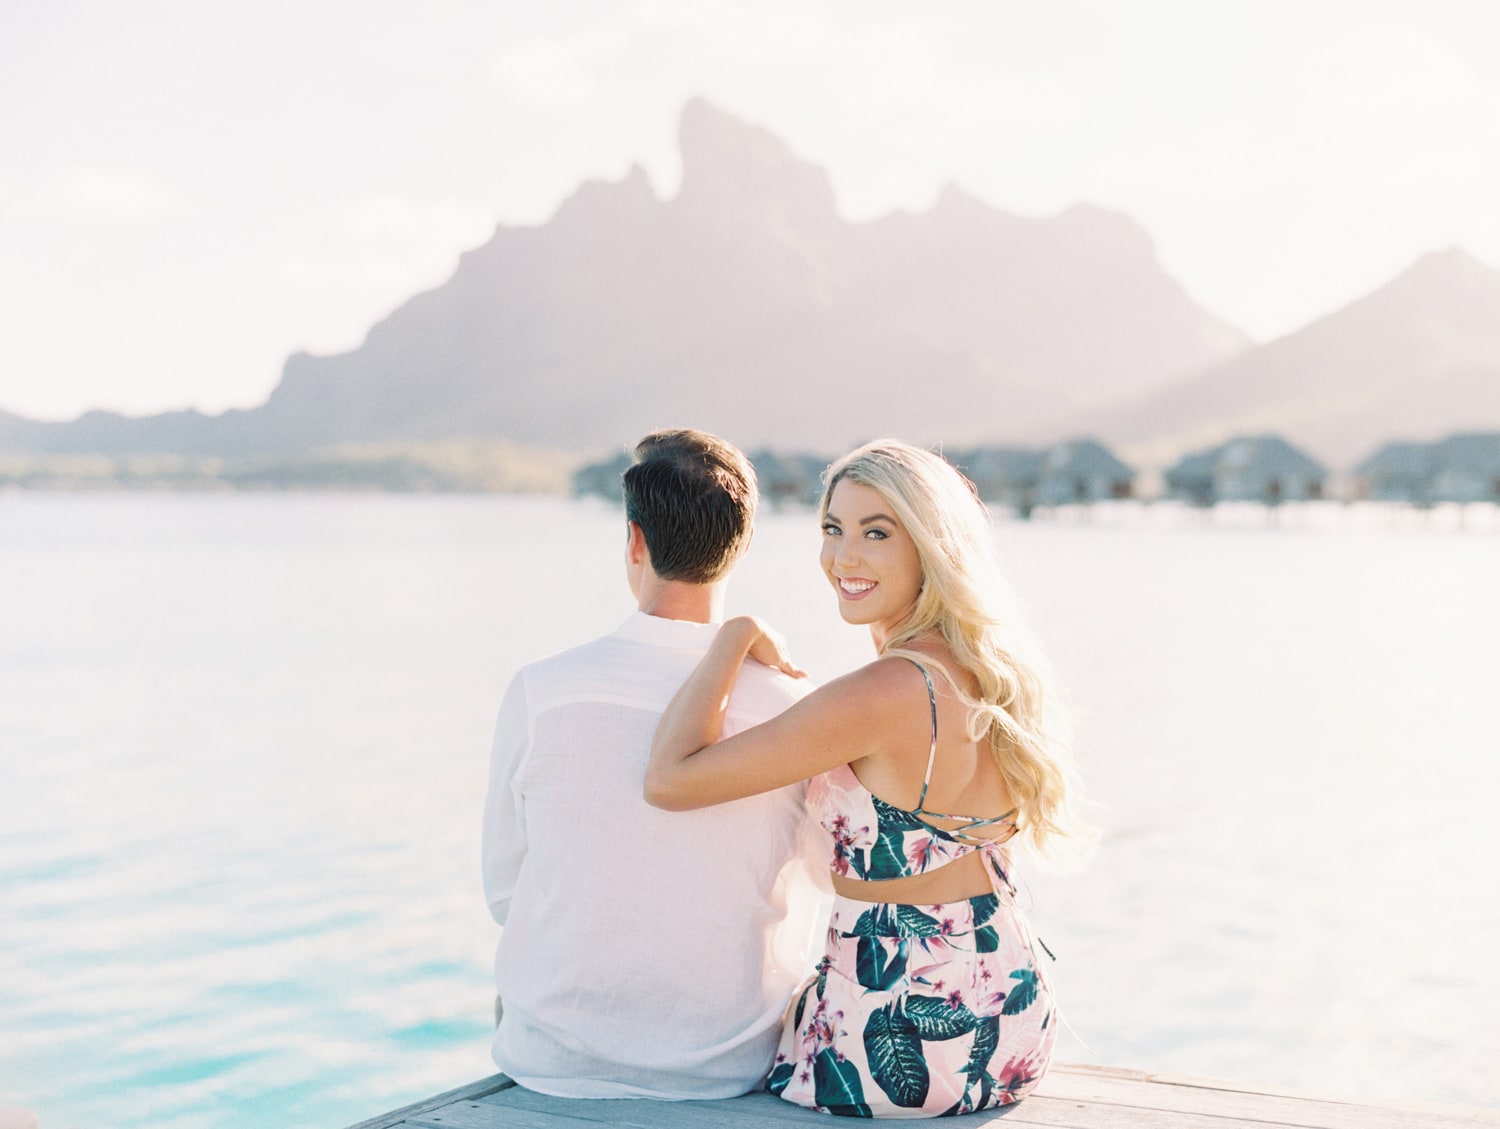 The bride on Honeymoon in Bora Bora, the best photos tips in Bora Bora